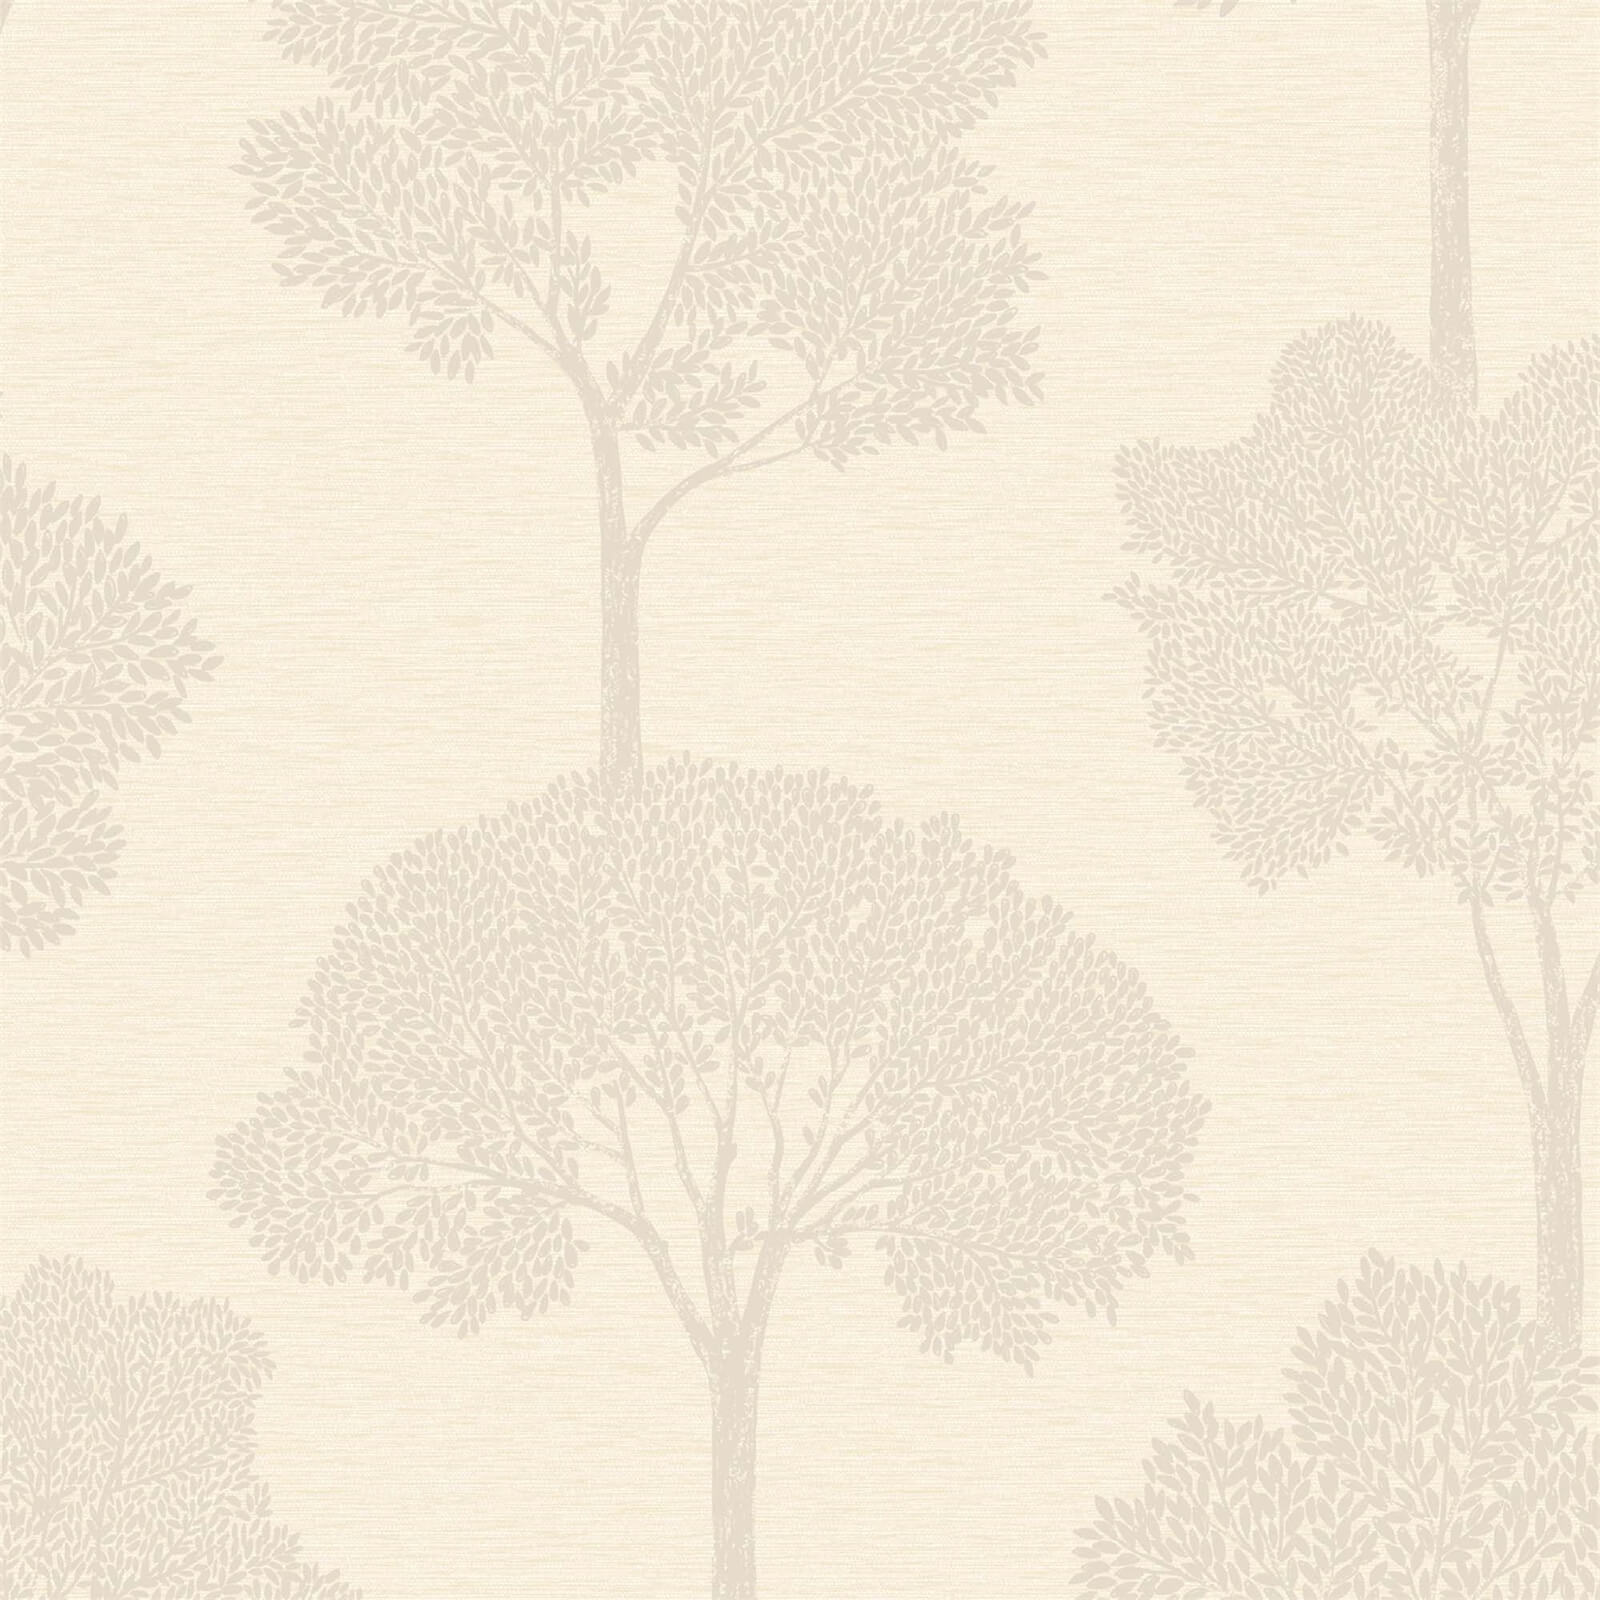 Holden Decor Ambleside Tree Textured Metallic Glitter Cream Wallpaper